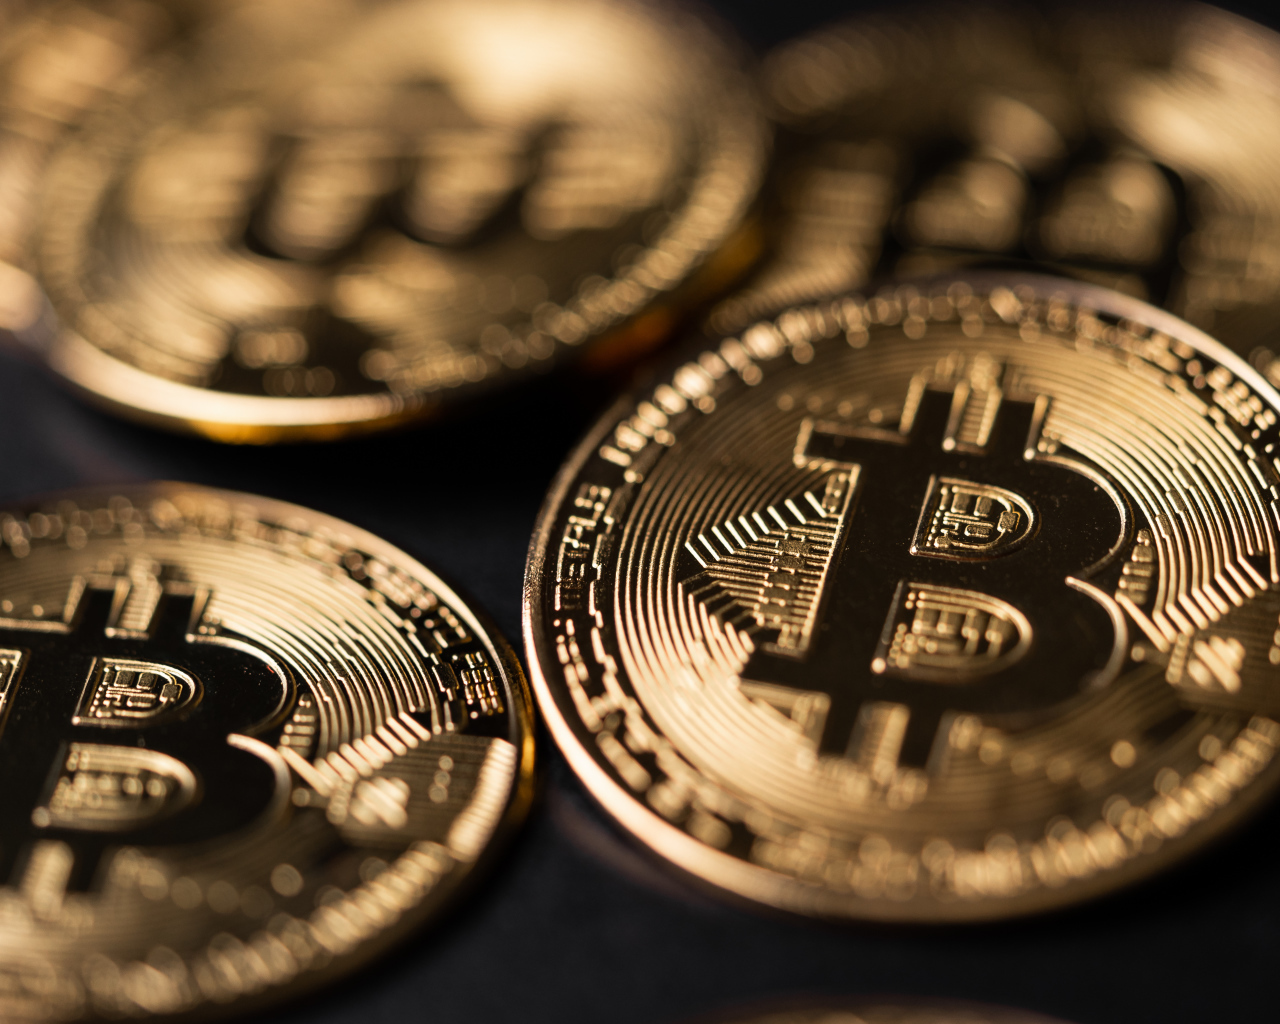 Gold coins bitcoin close up